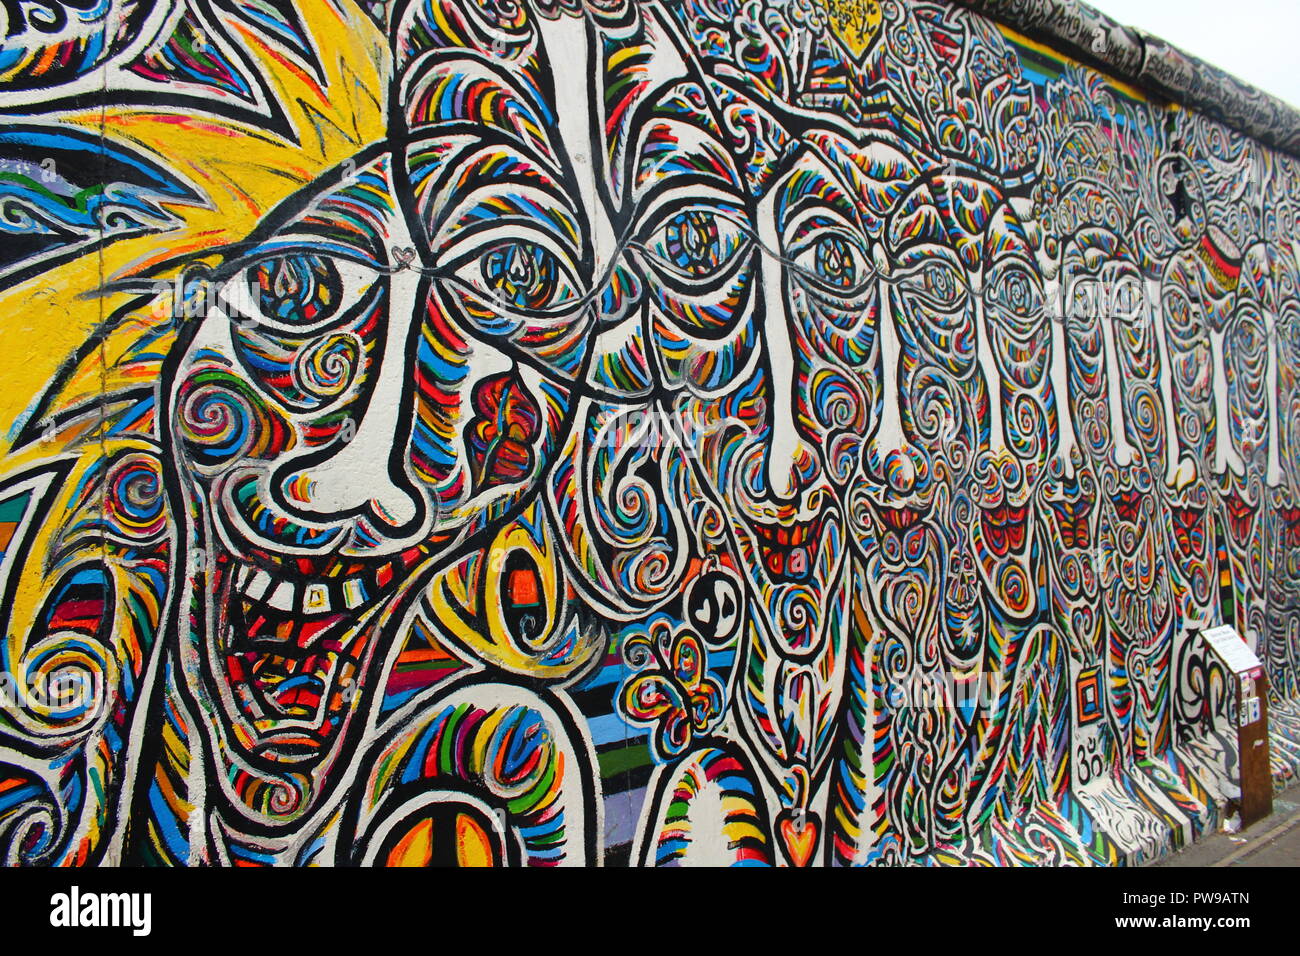 World\'s People, East Side Gallery, Berlin Wall Stock Photo - Alamy